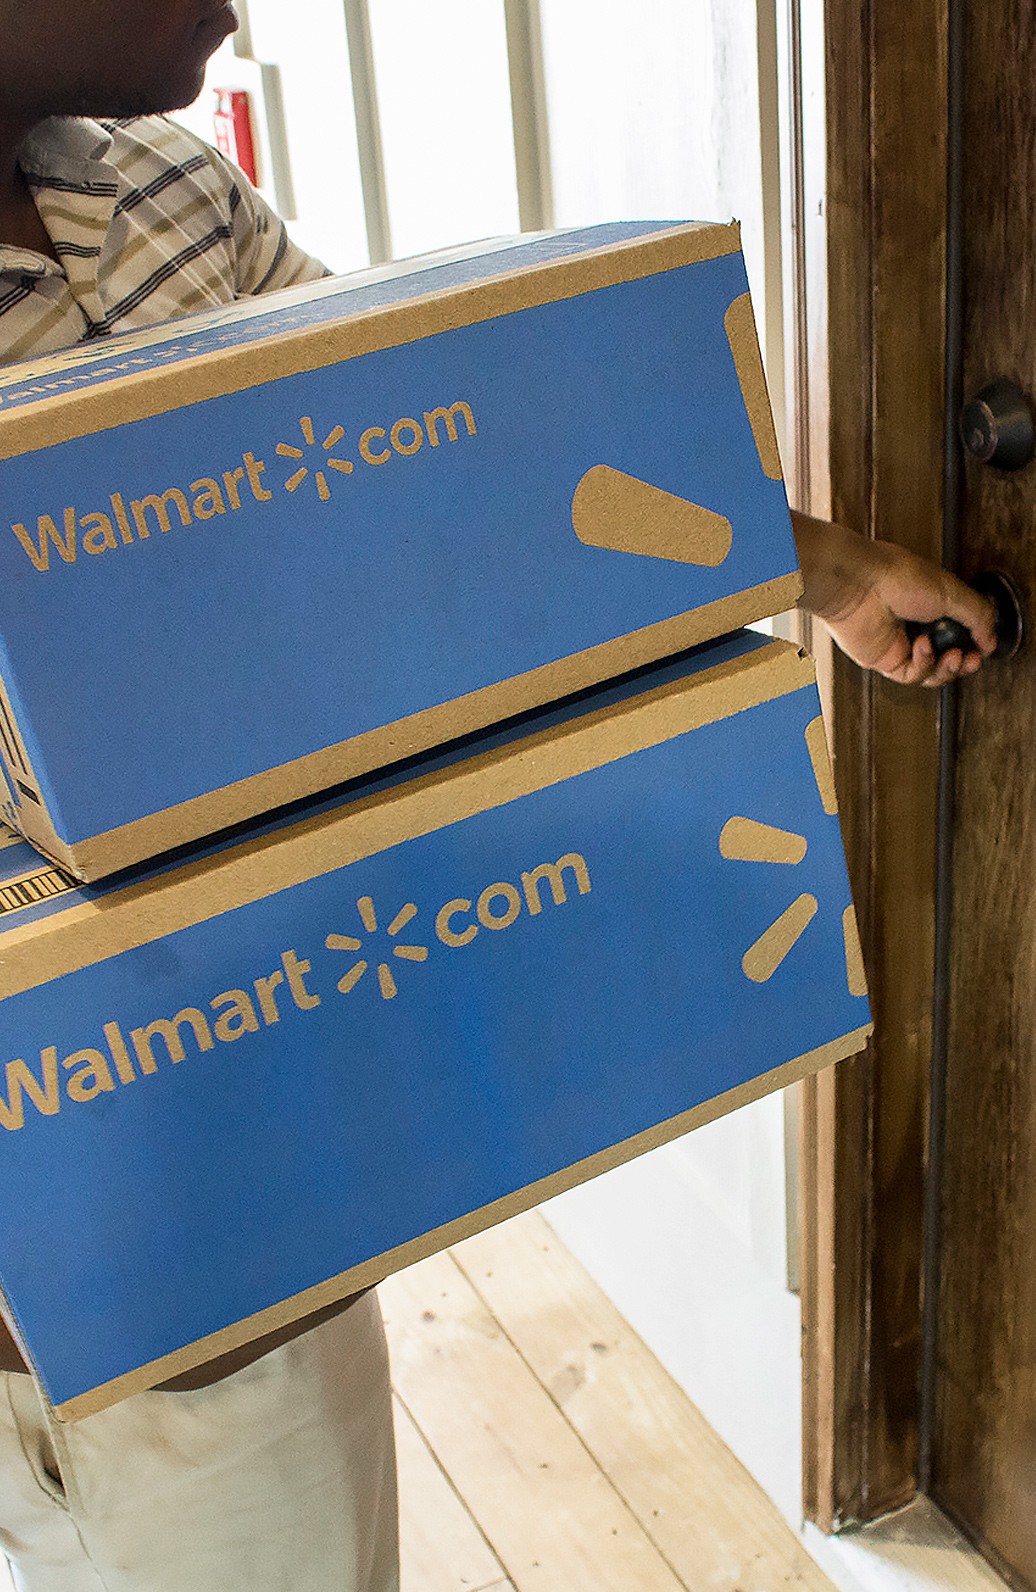 Walmart come Amazon: raggiunto un accordo con Paramount per streaming